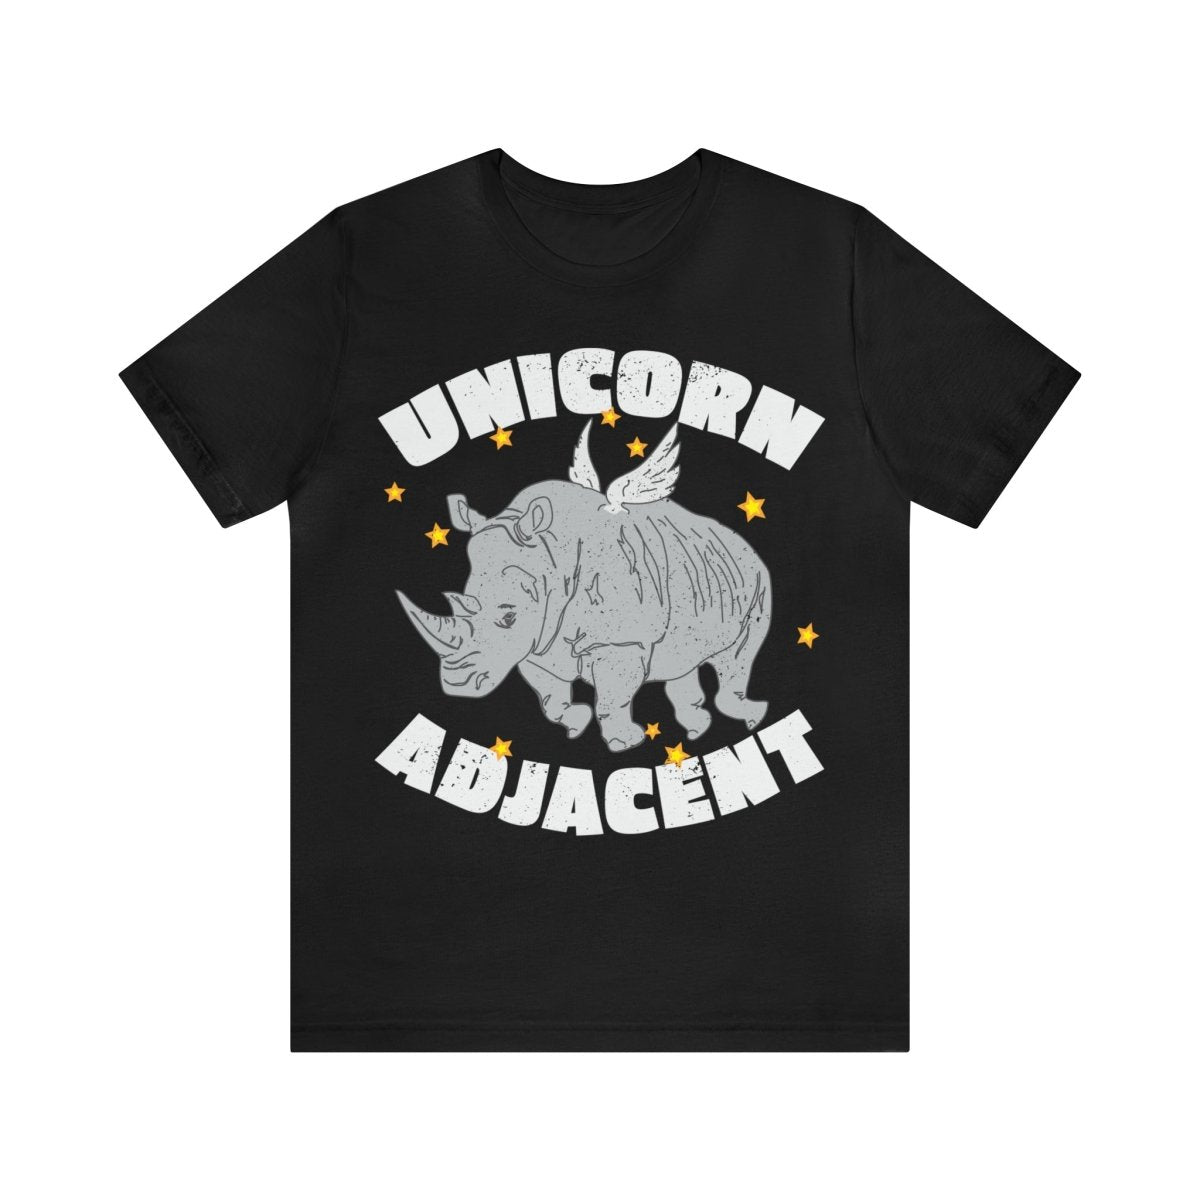 Unicorn Adjacent Premium T-Shirt, Flying Rhino, Beautifully Imperfect, Be Different & Happy